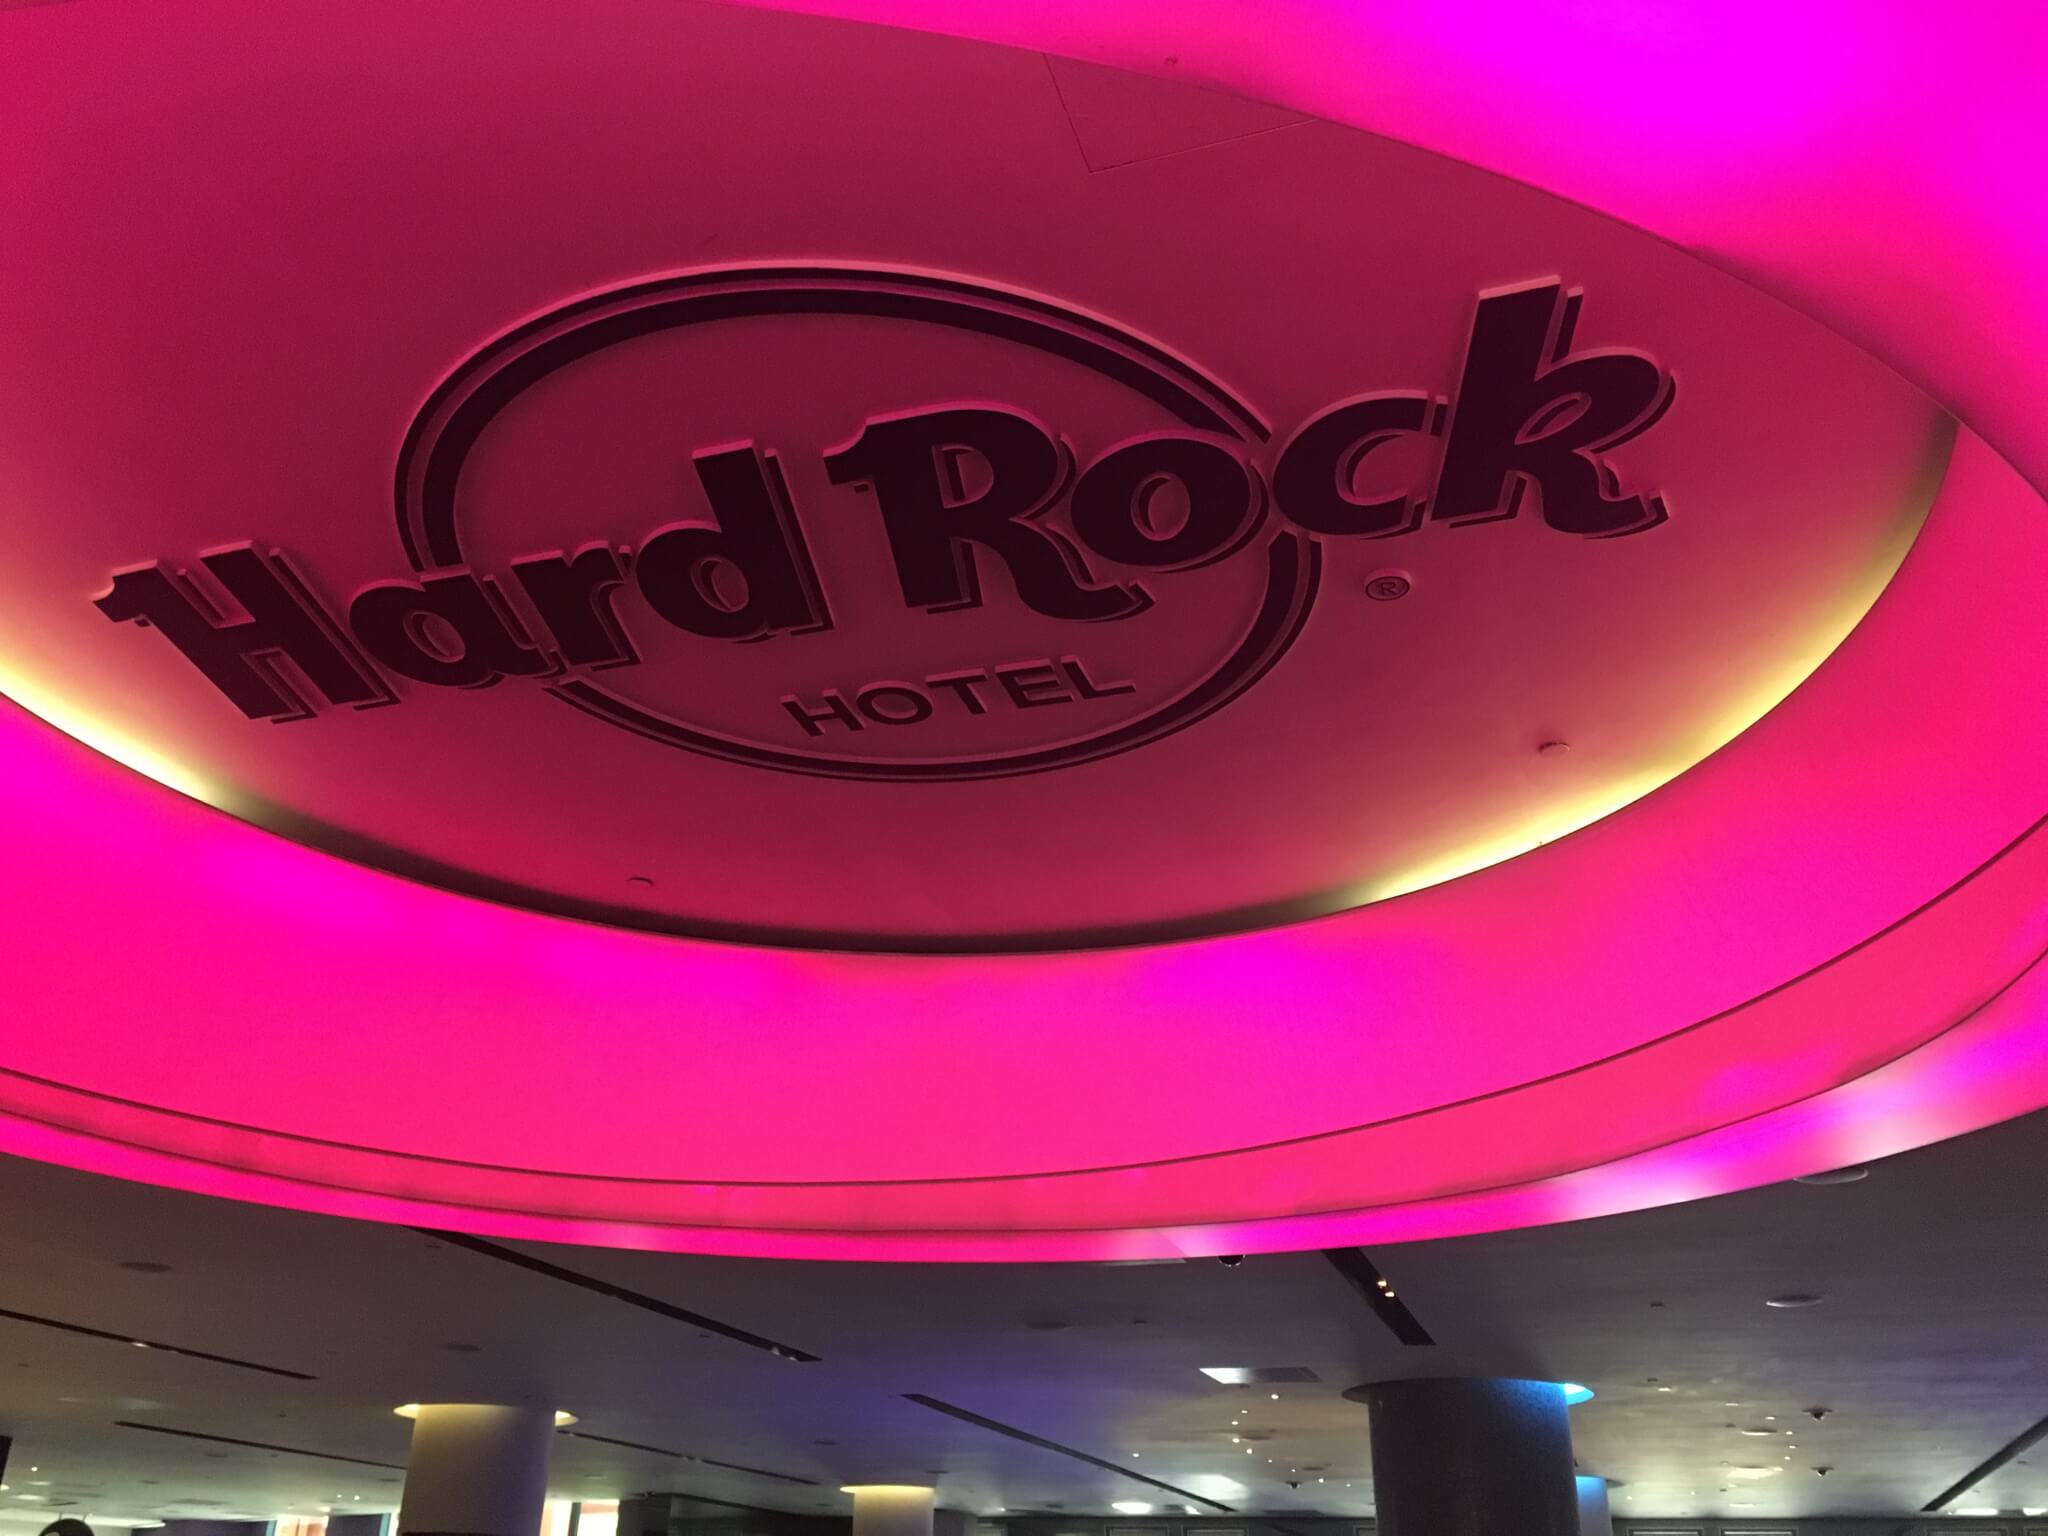 Hard Rock Hotel Lobby Ceiling Decor